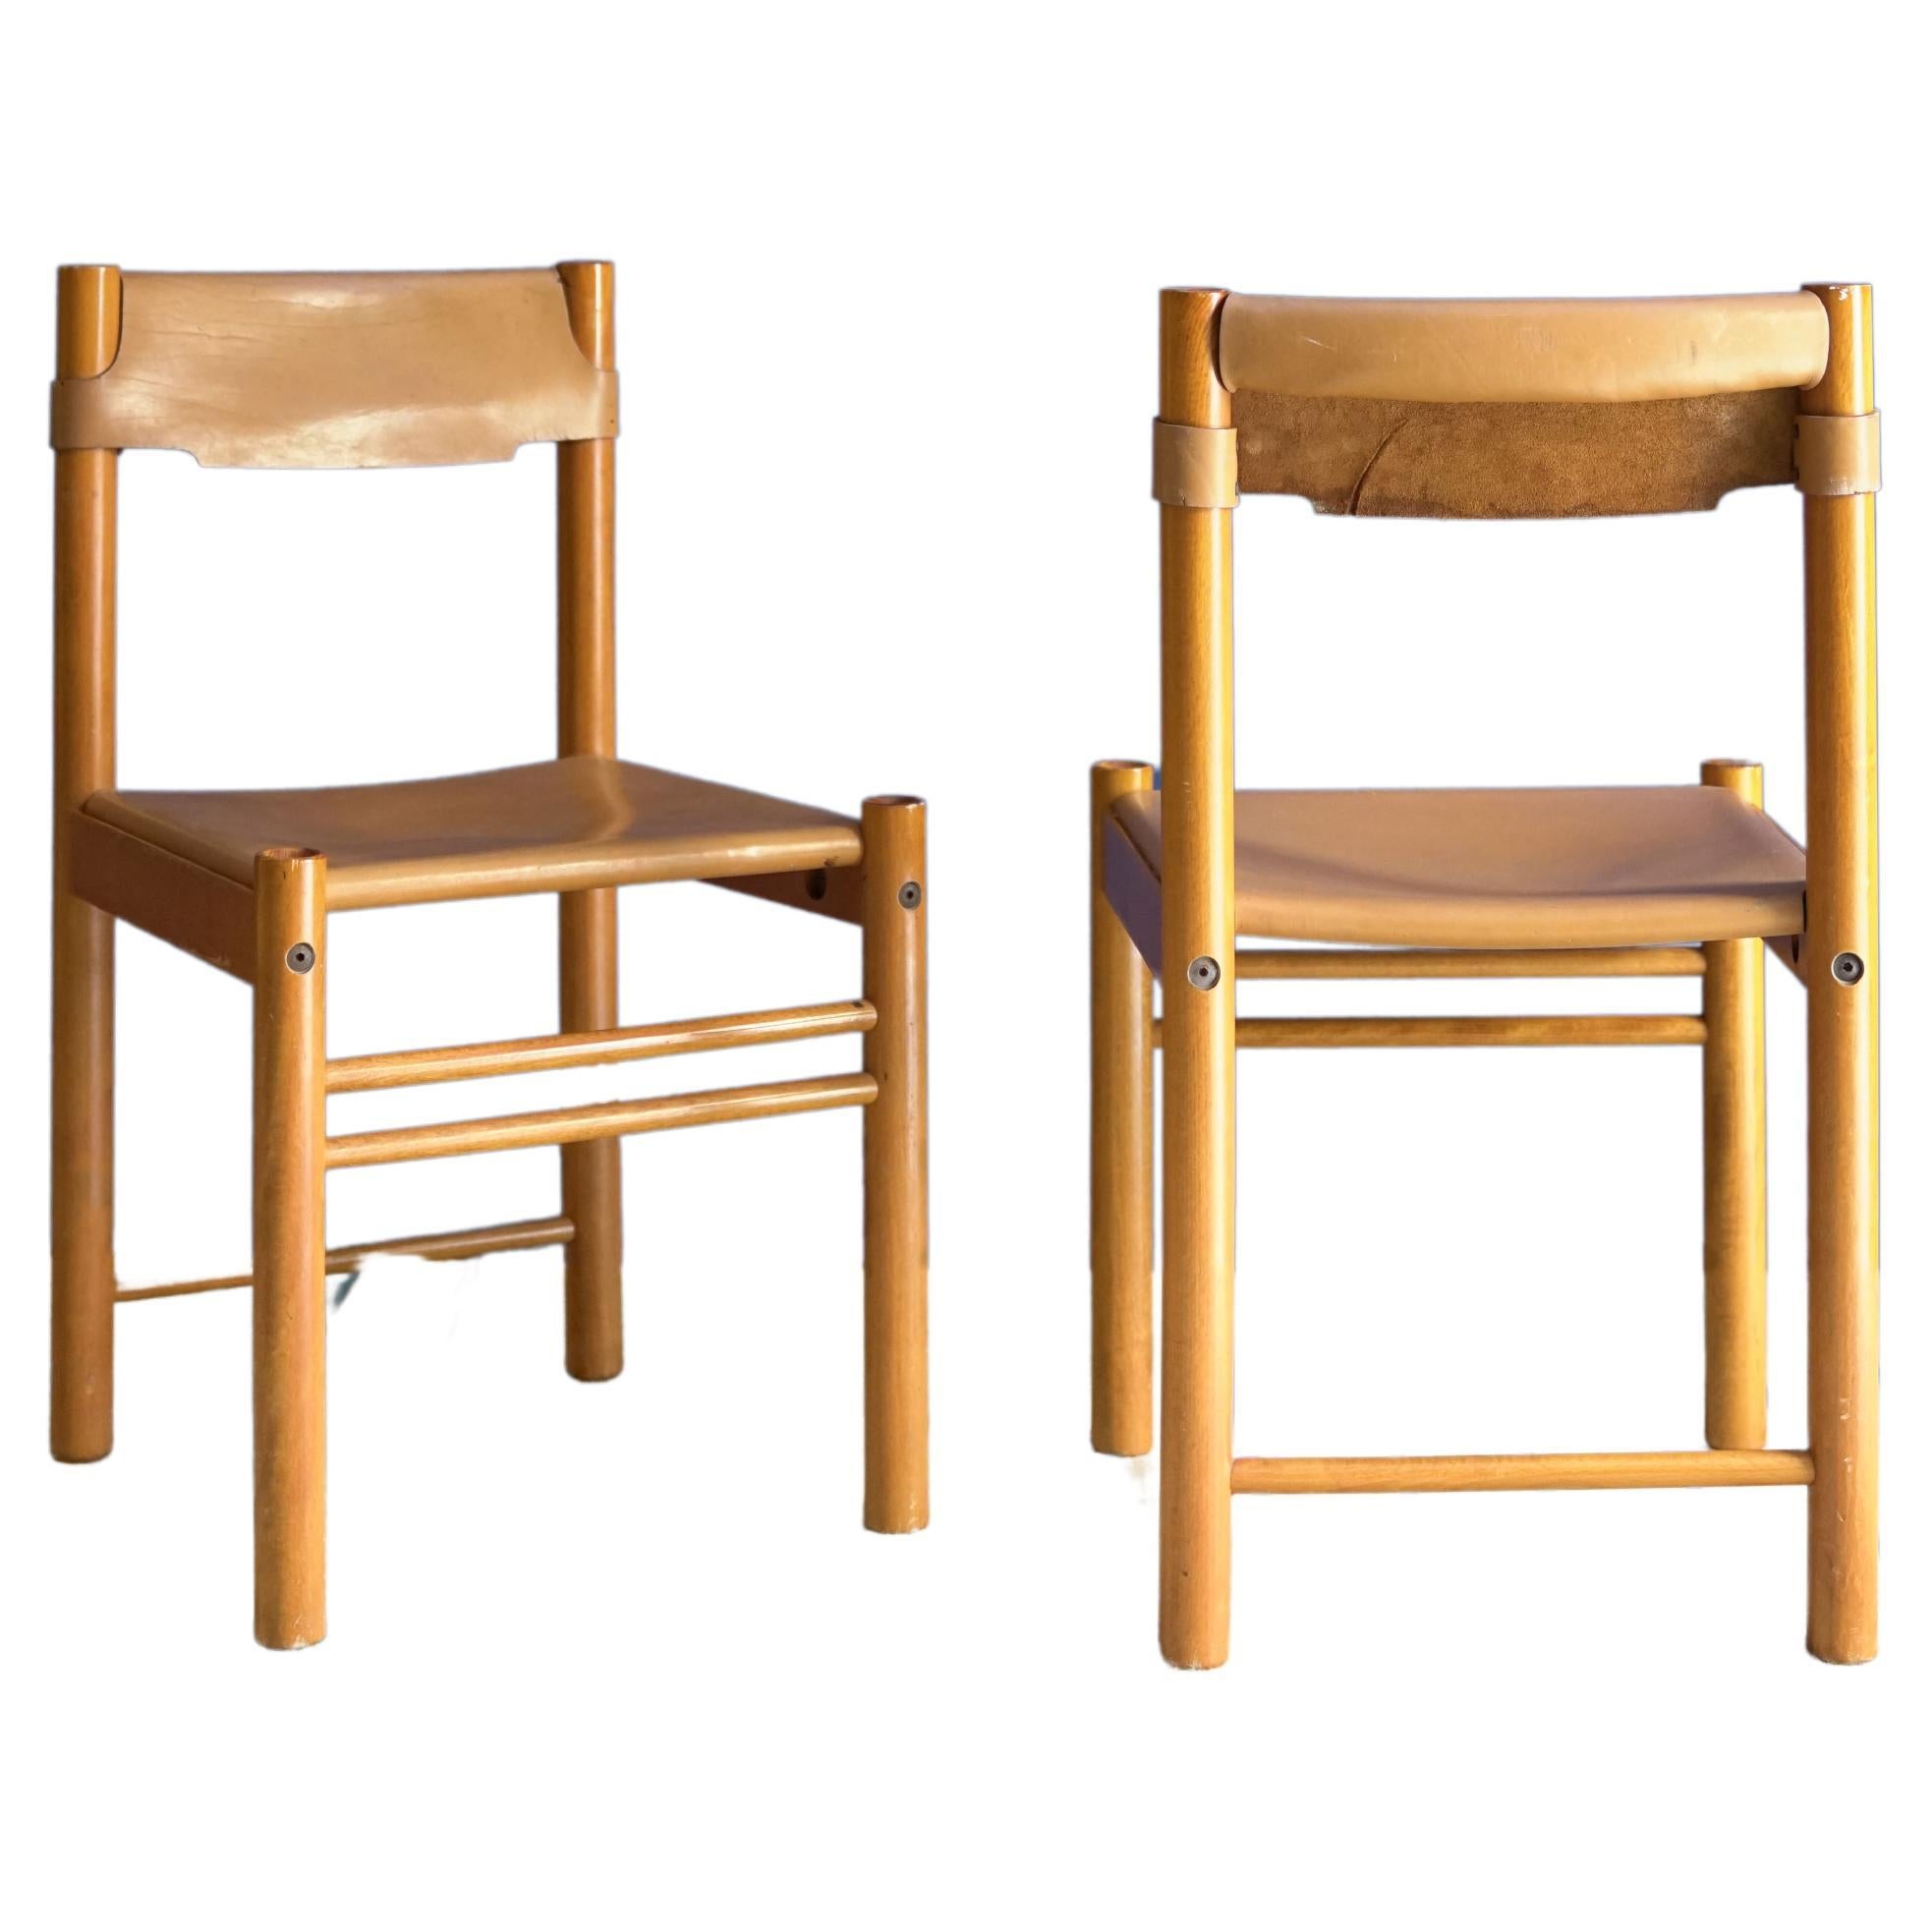 Safari Chairs by Ibisco Sedie